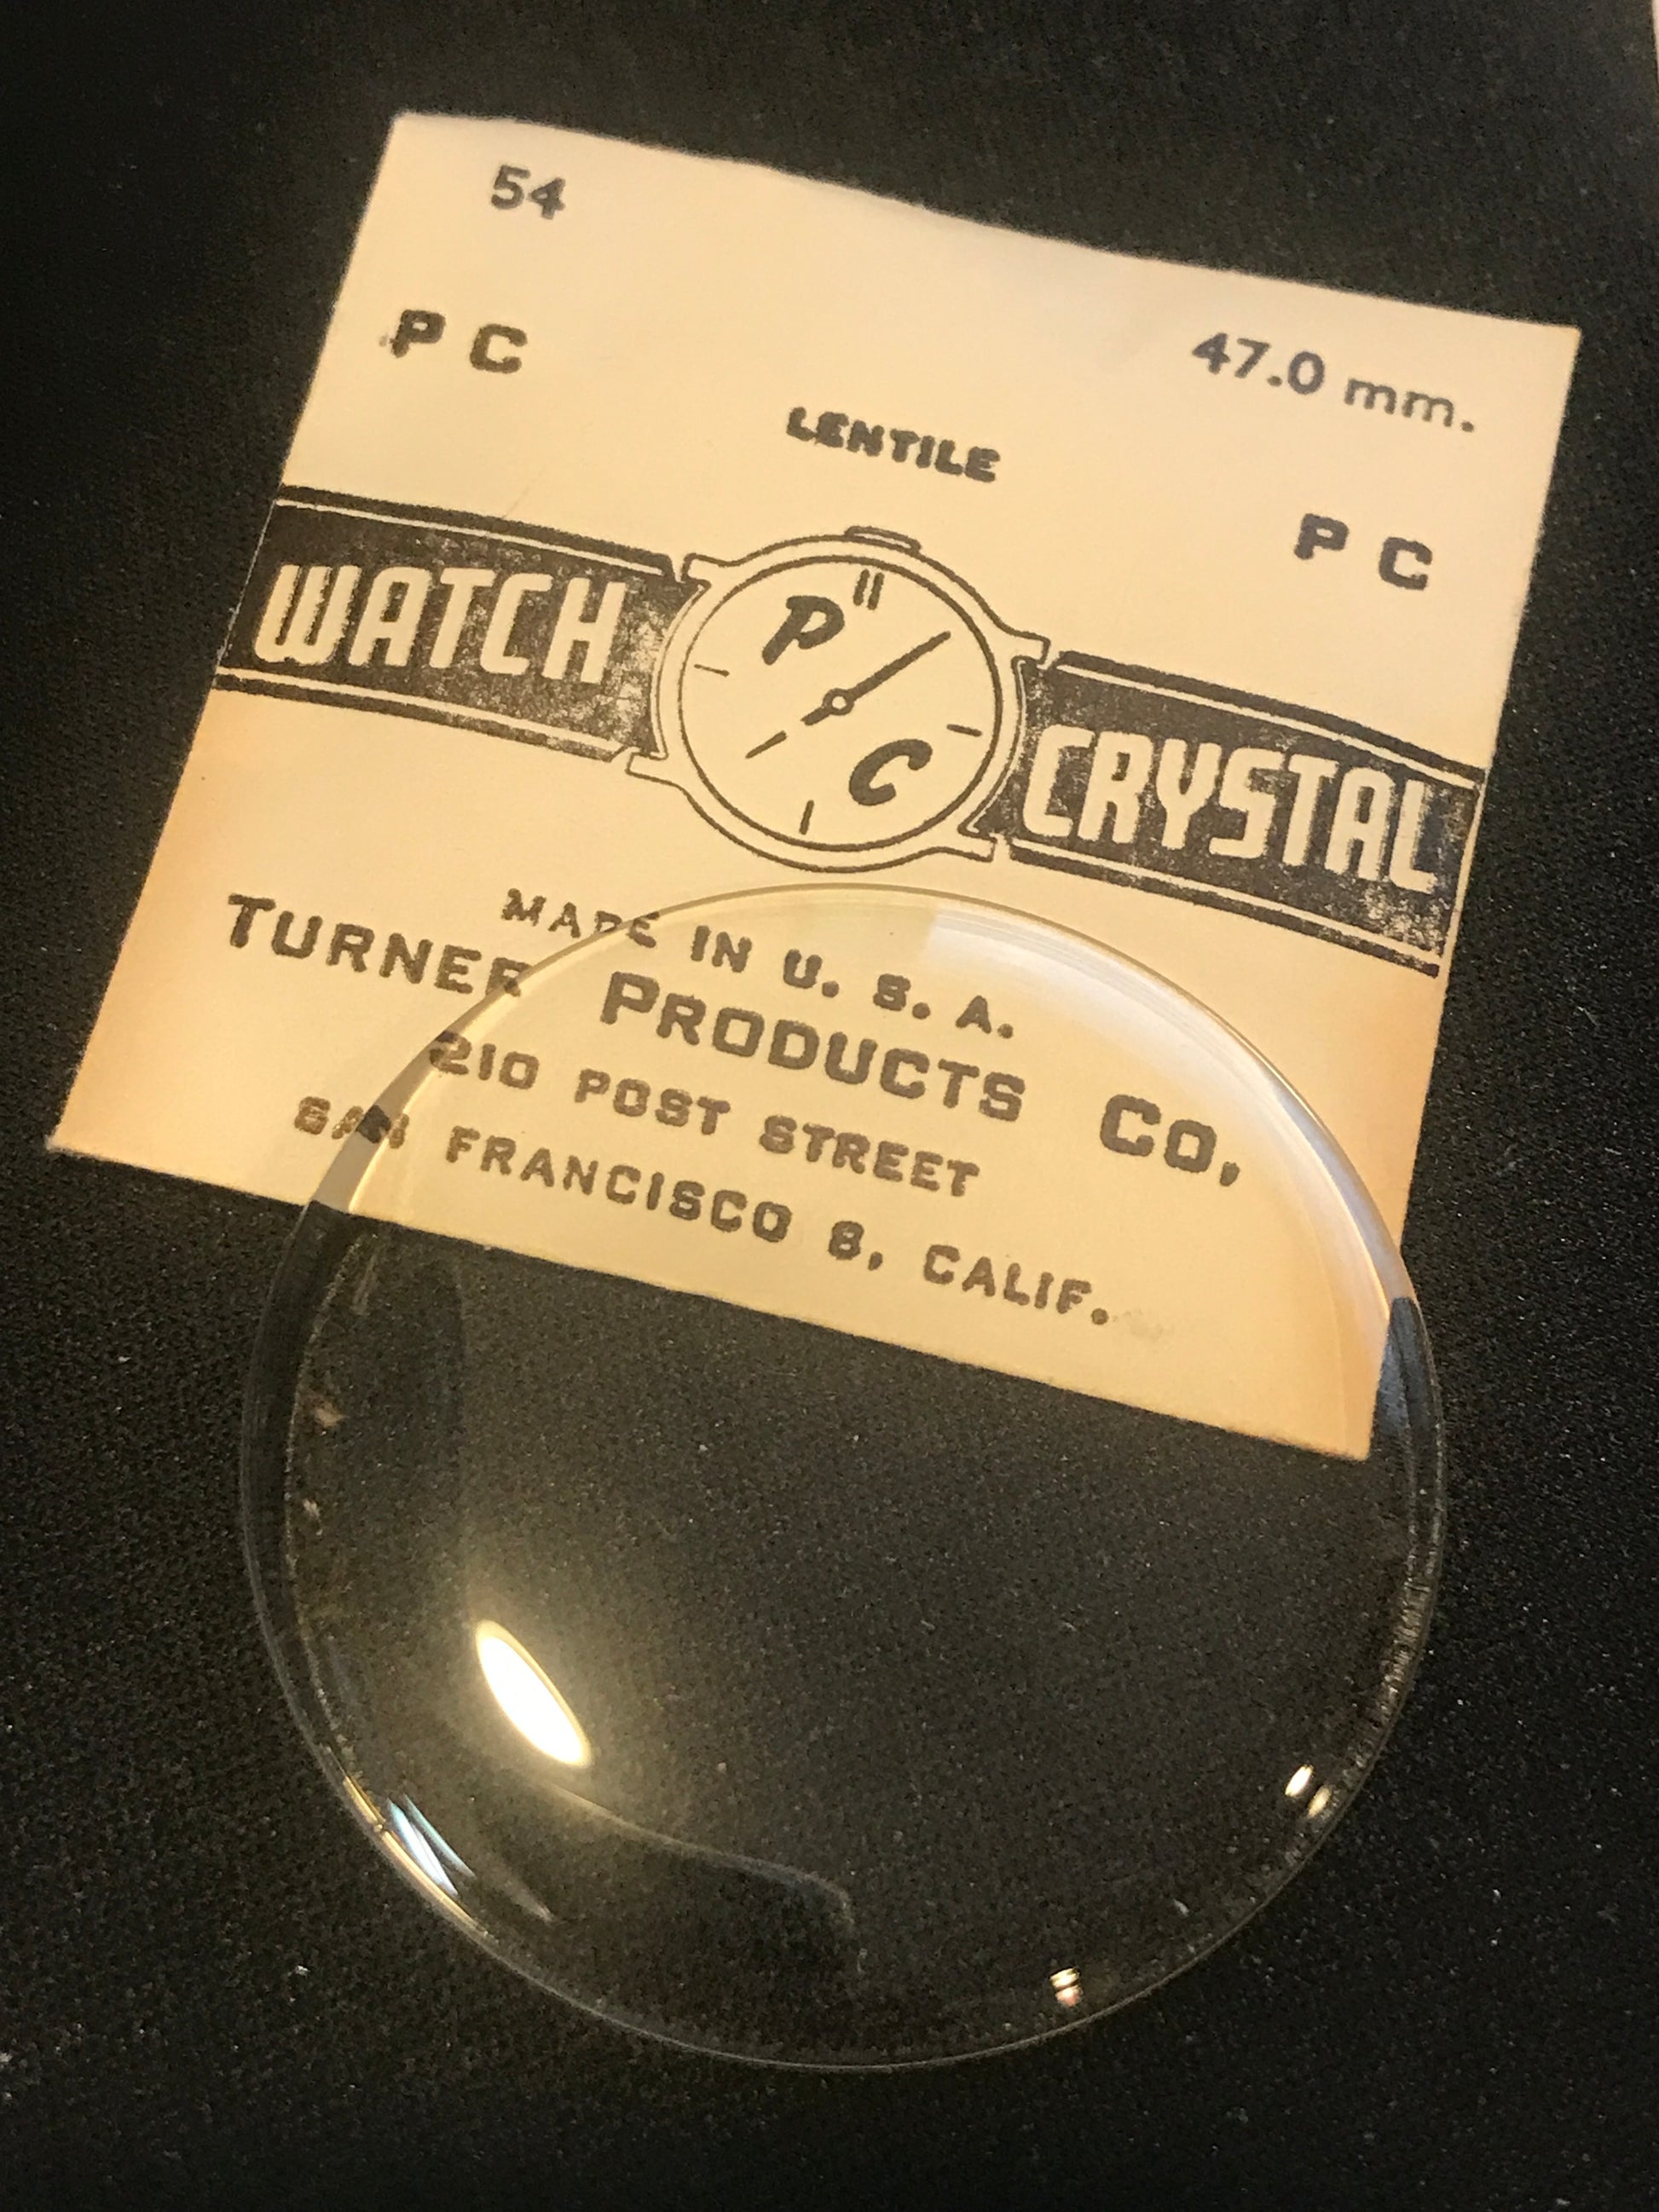 Turner Round Pocket Watch Crystal PC 54, 47.0mm - New